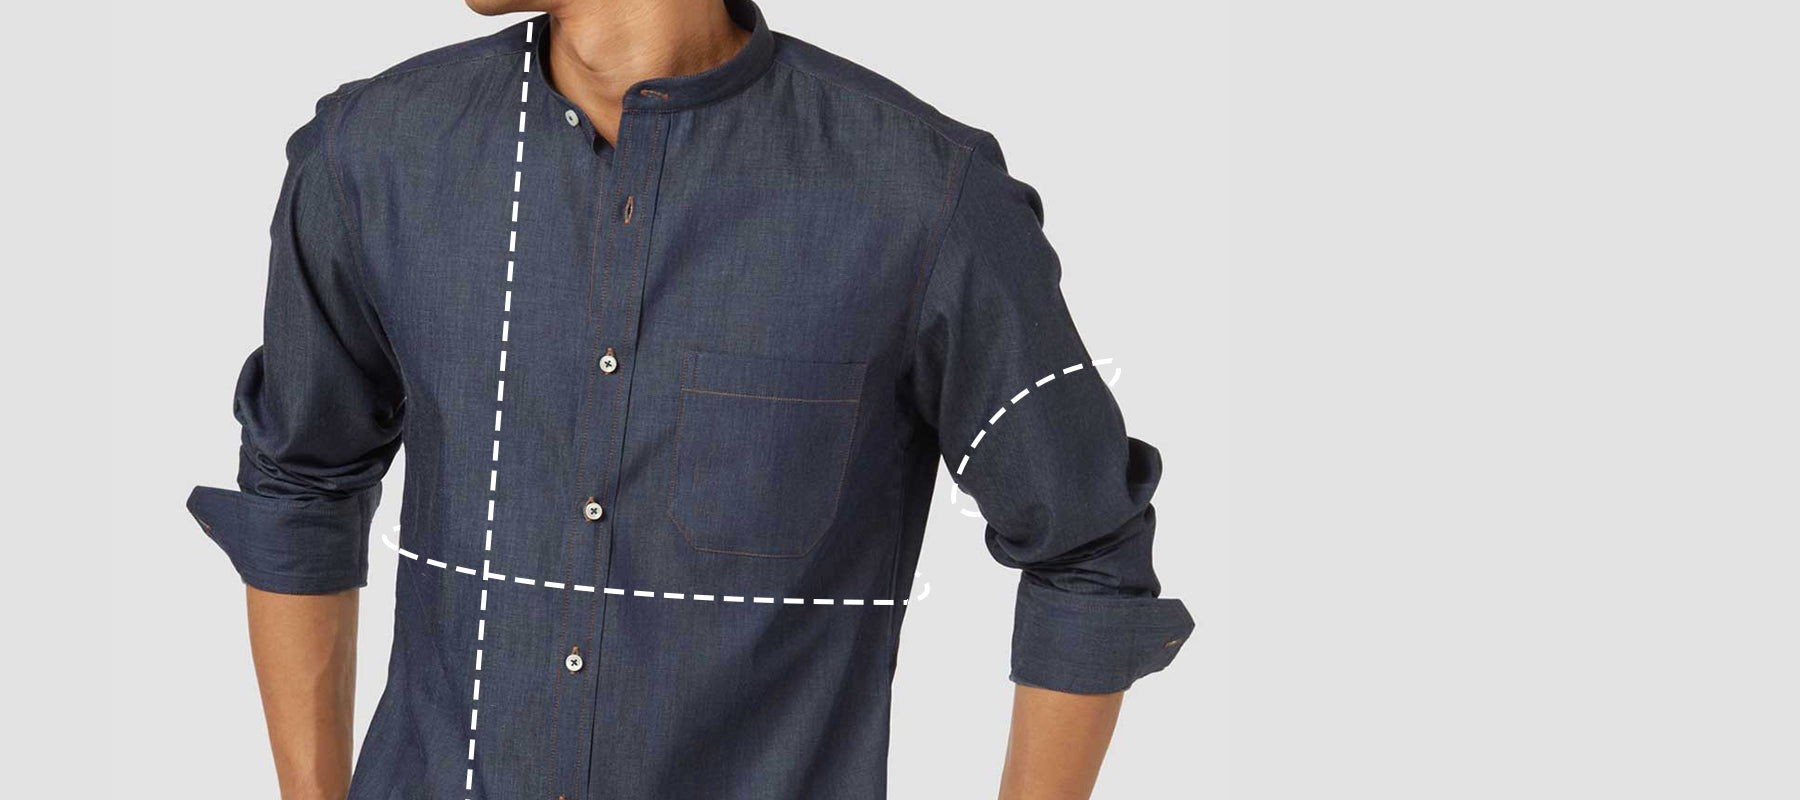 Men's Dress Shirt Fit Guide & Size Chart – Bombay Shirt Company